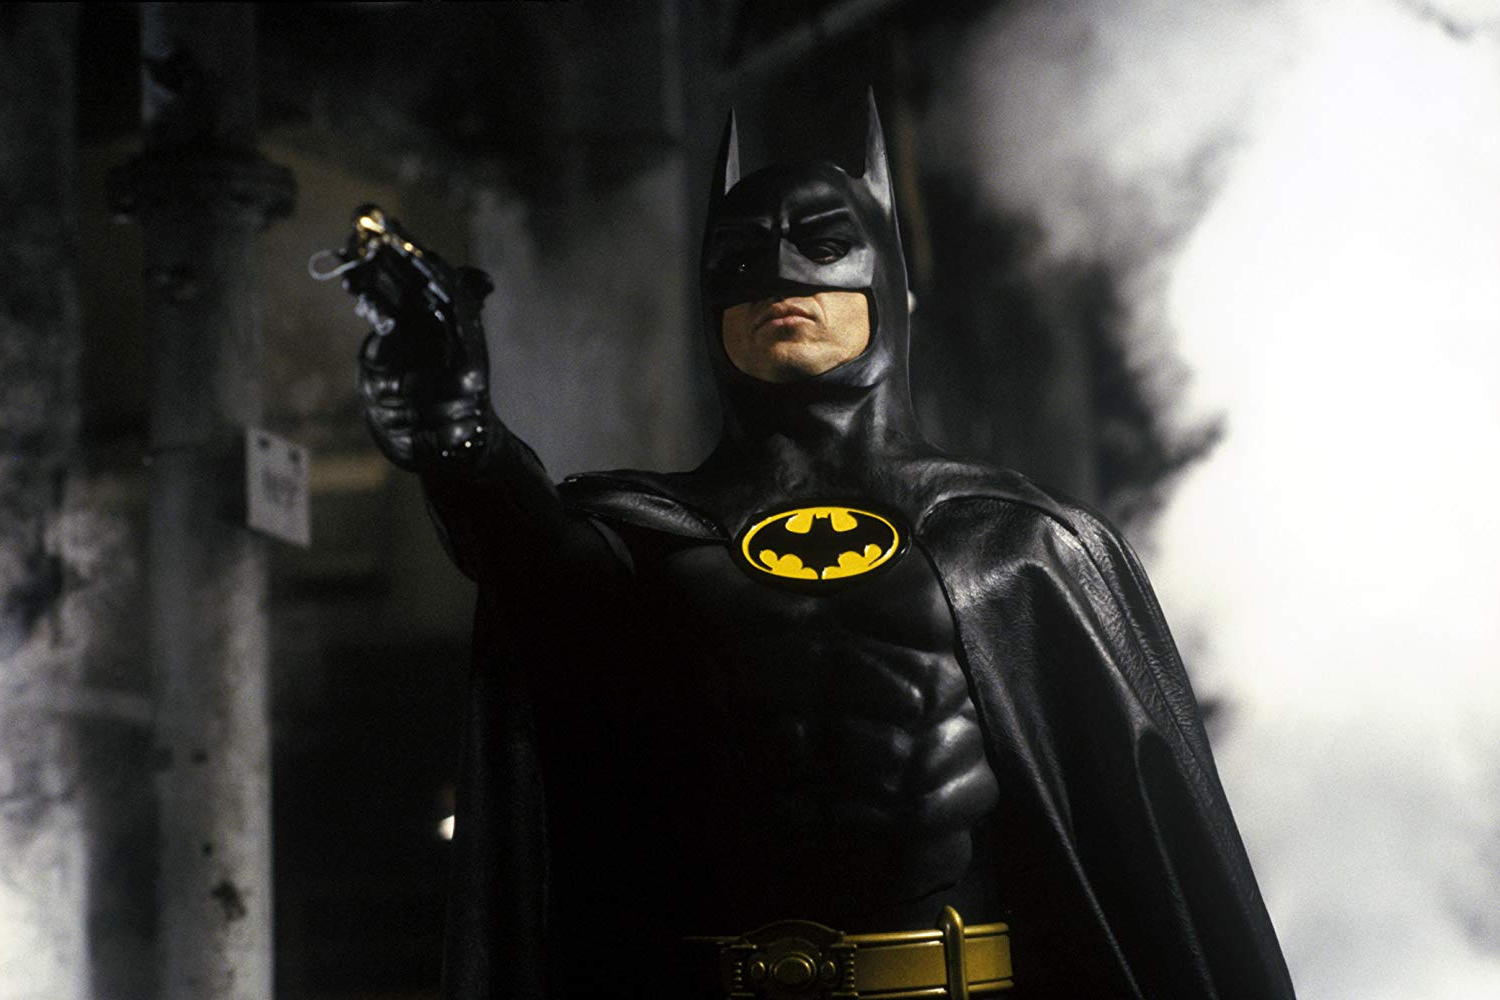 Michael Keaton points a grappling hook gun in Batman.